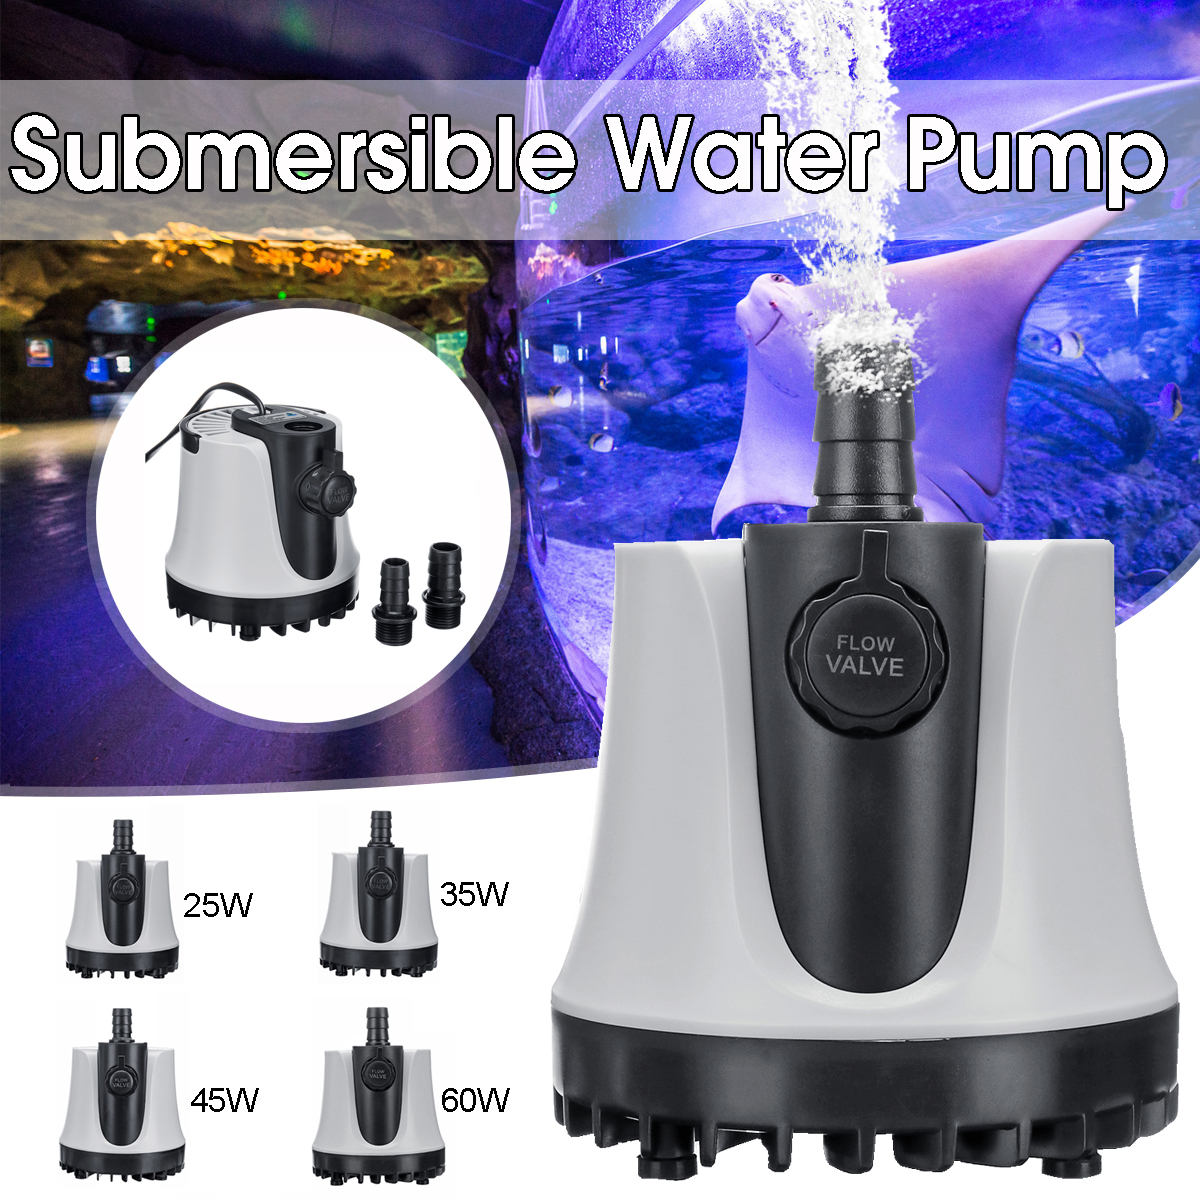 Submersible-Water-Pump-High-Pressure-Switch-Aquarium-Fish-Tank-Water-Pump-25W35W45W60W-1472425-1